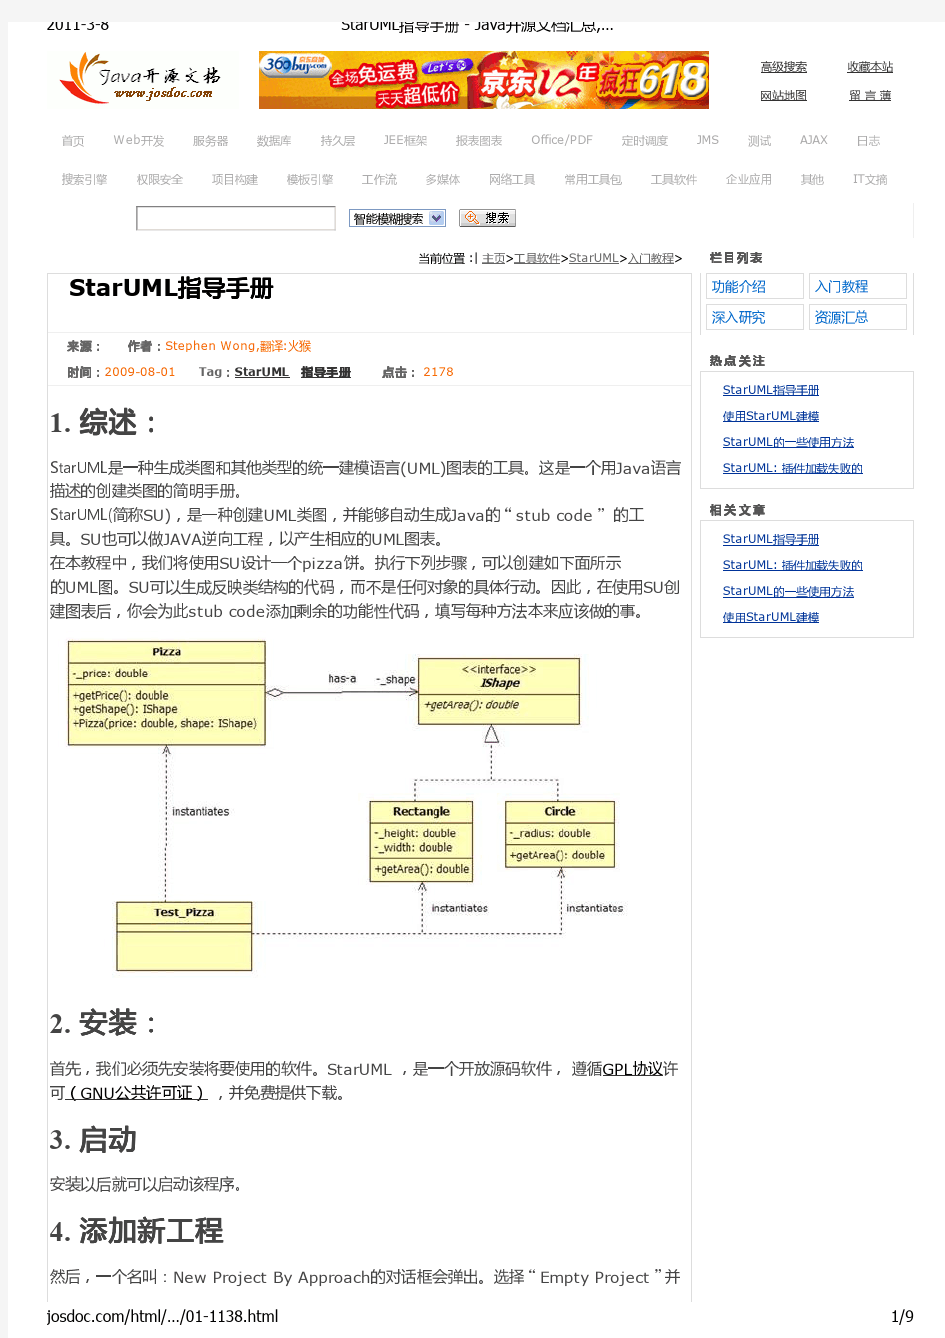 StarUML指导手册